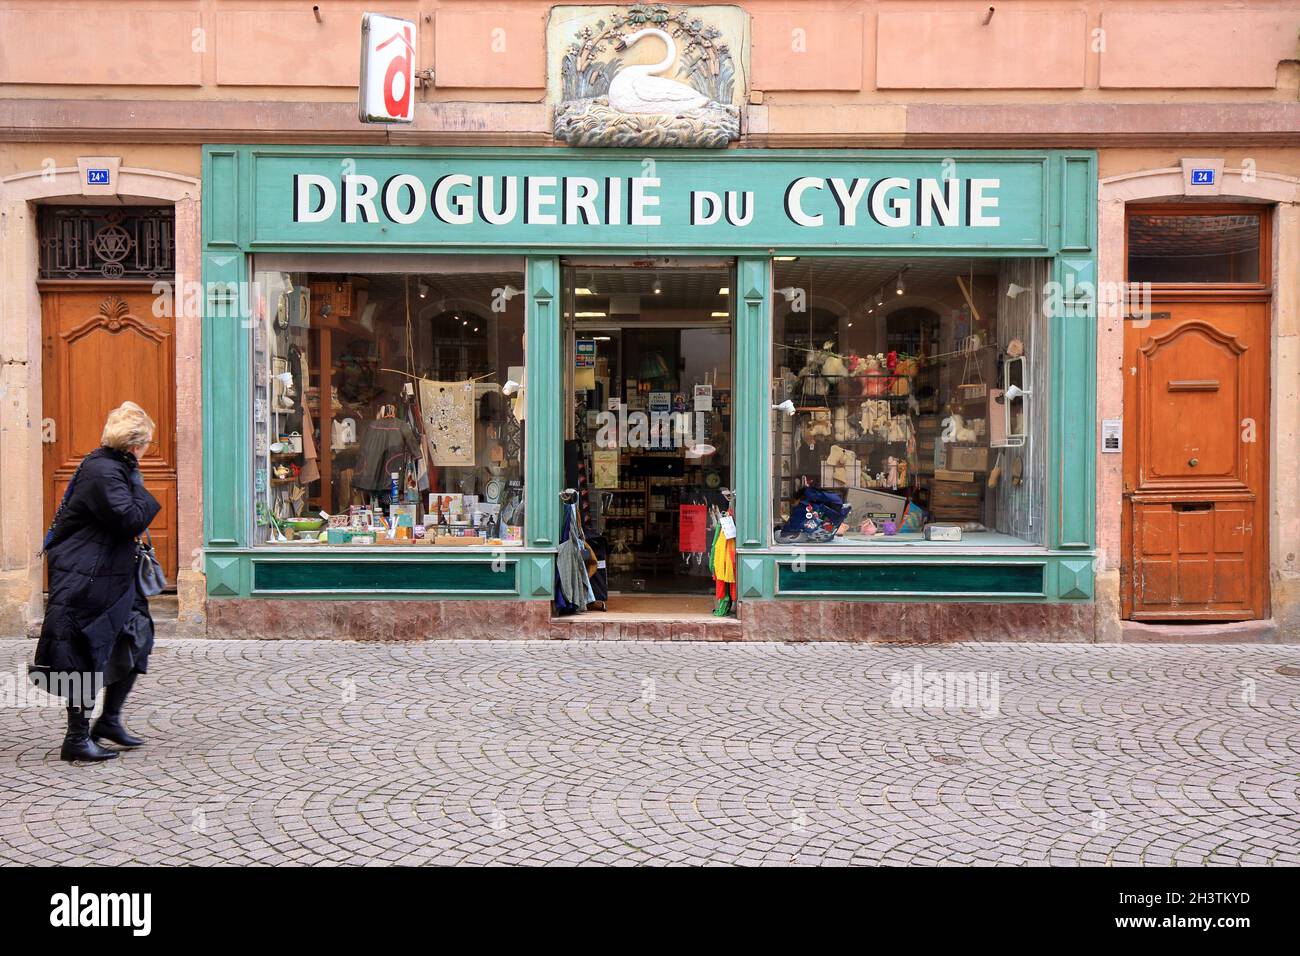 Droguerie du Cygne, 24 Grand Rue, Grande-Île de Strasbourg, France. exterior storefront of a home goods, and gift shop. Stock Photo